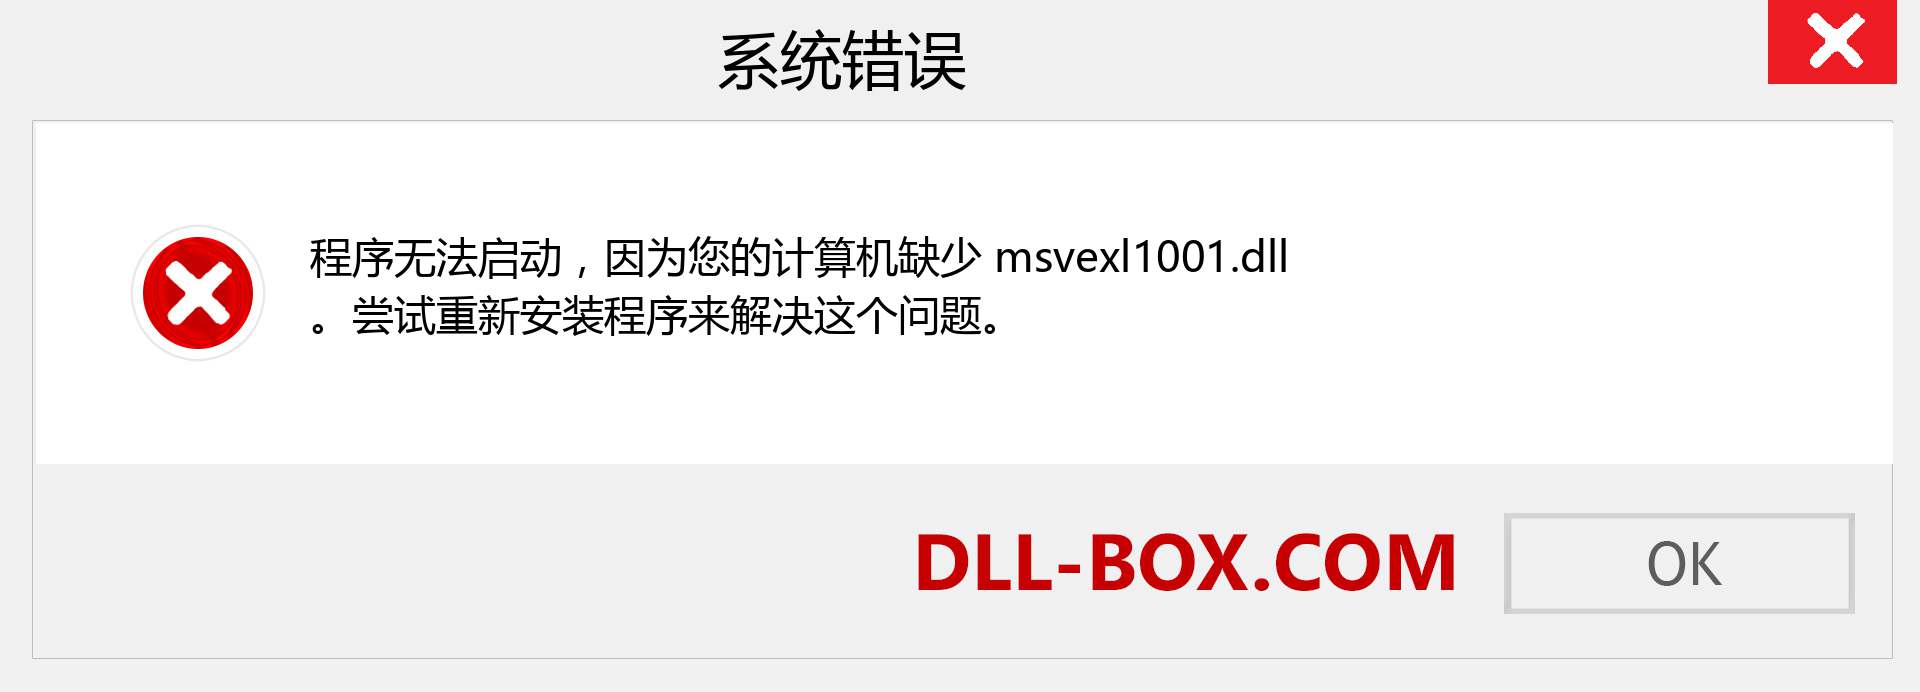 msvexl1001.dll 文件丢失？。 适用于 Windows 7、8、10 的下载 - 修复 Windows、照片、图像上的 msvexl1001 dll 丢失错误